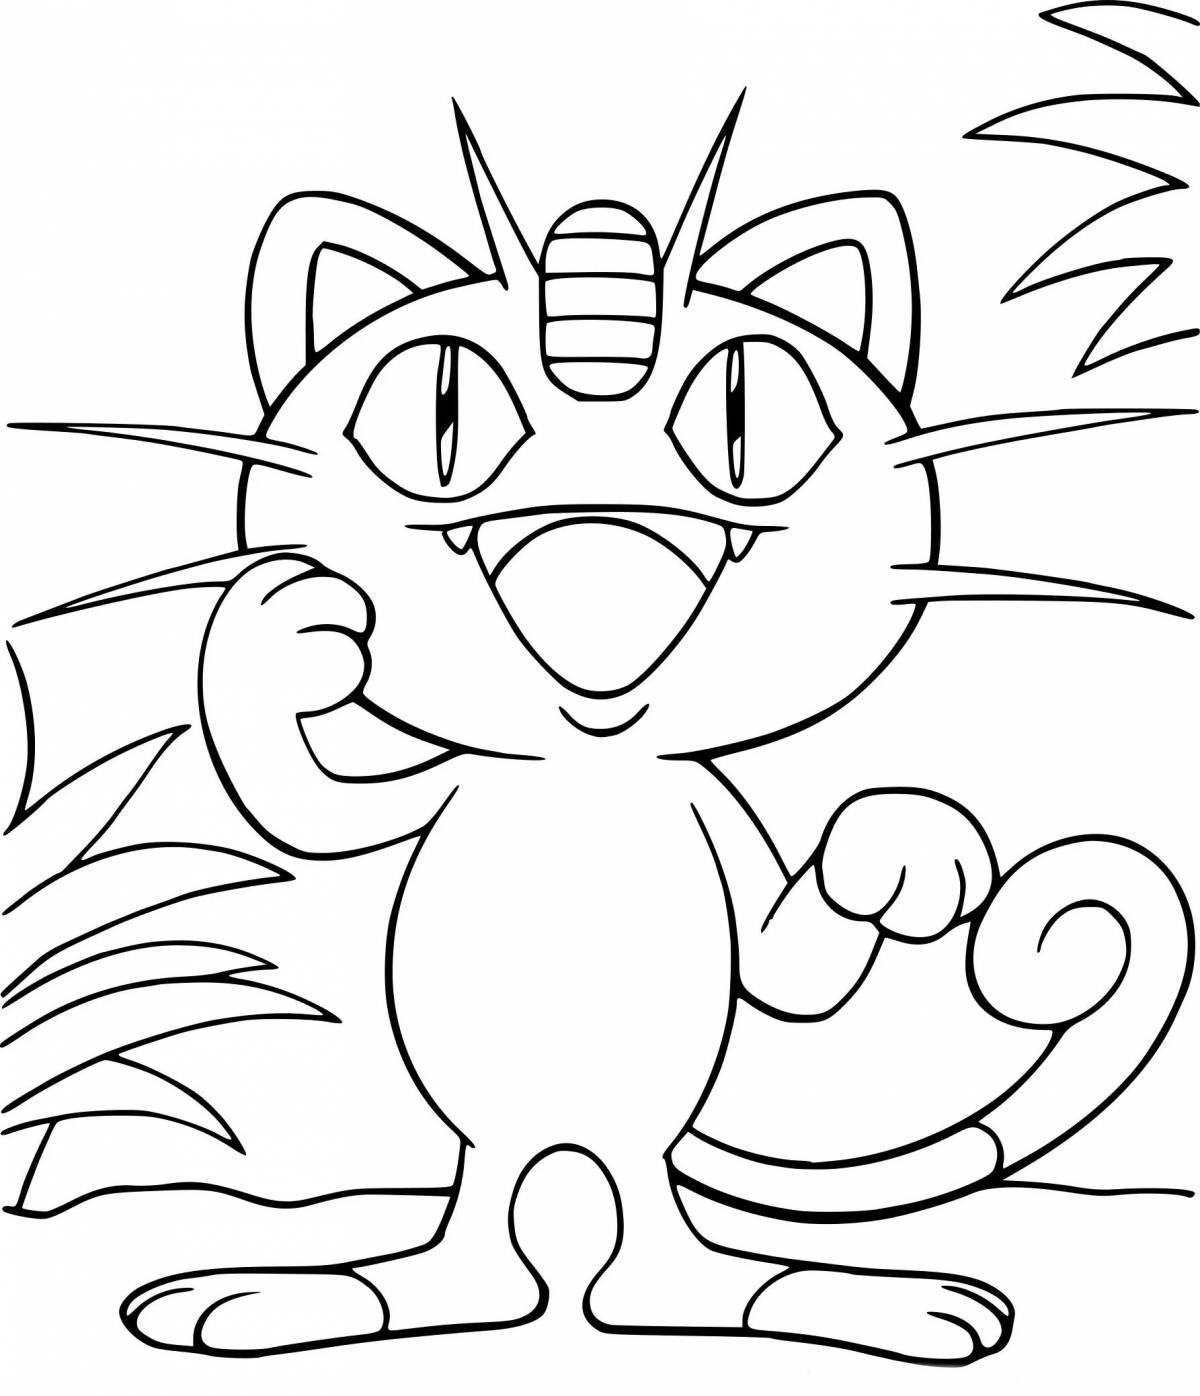 Fancy coloring pokemon meowth